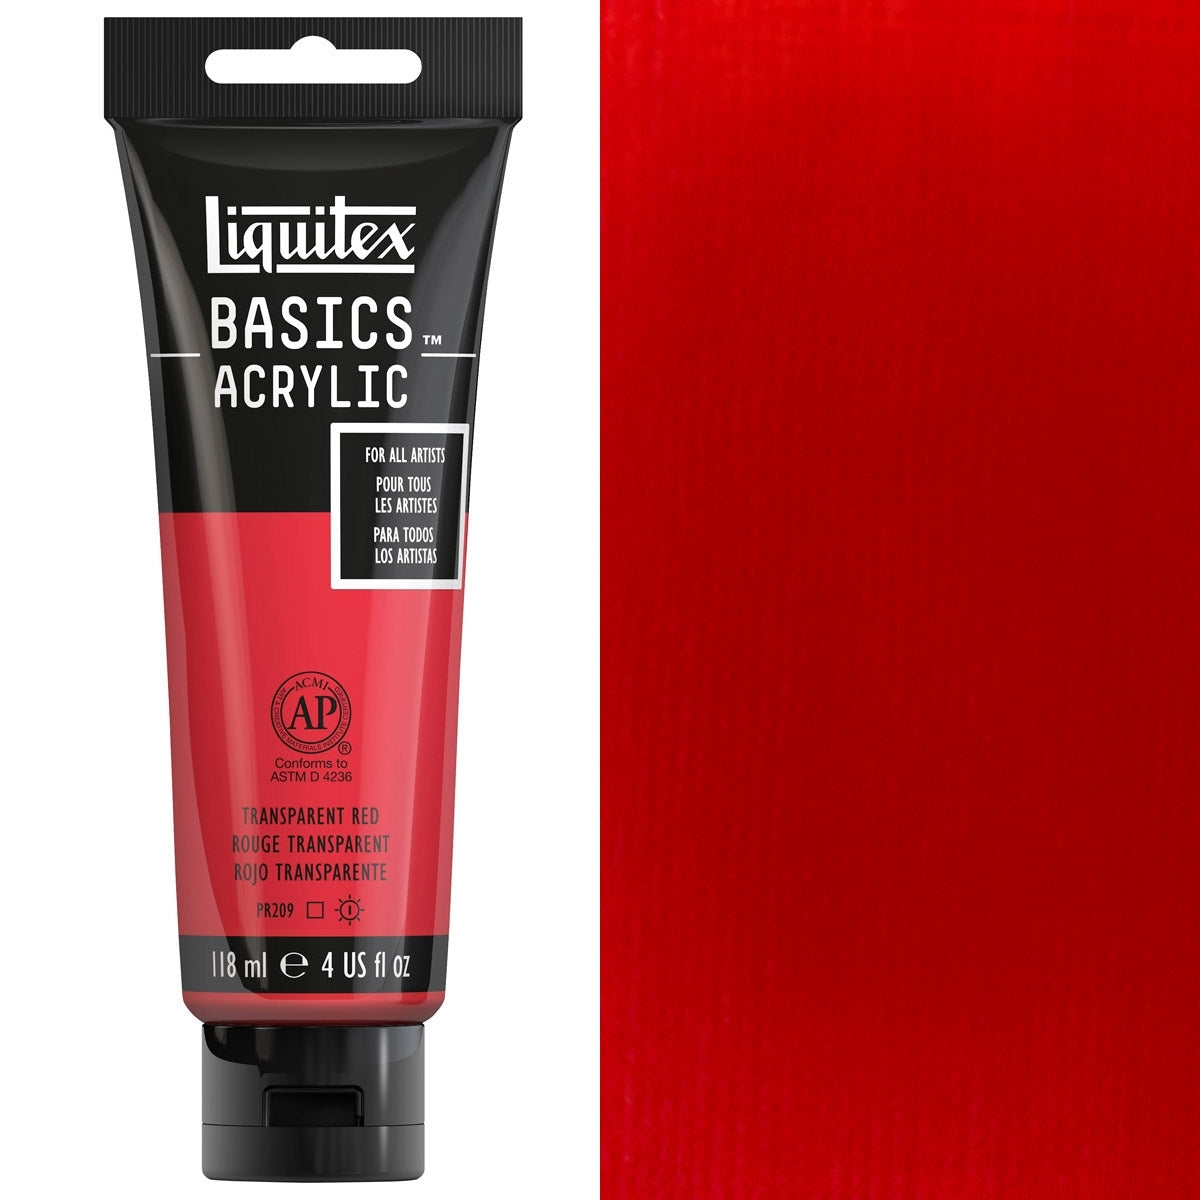 Liquitex - Basics Acrylic Colour - 118ml - Transparent Red